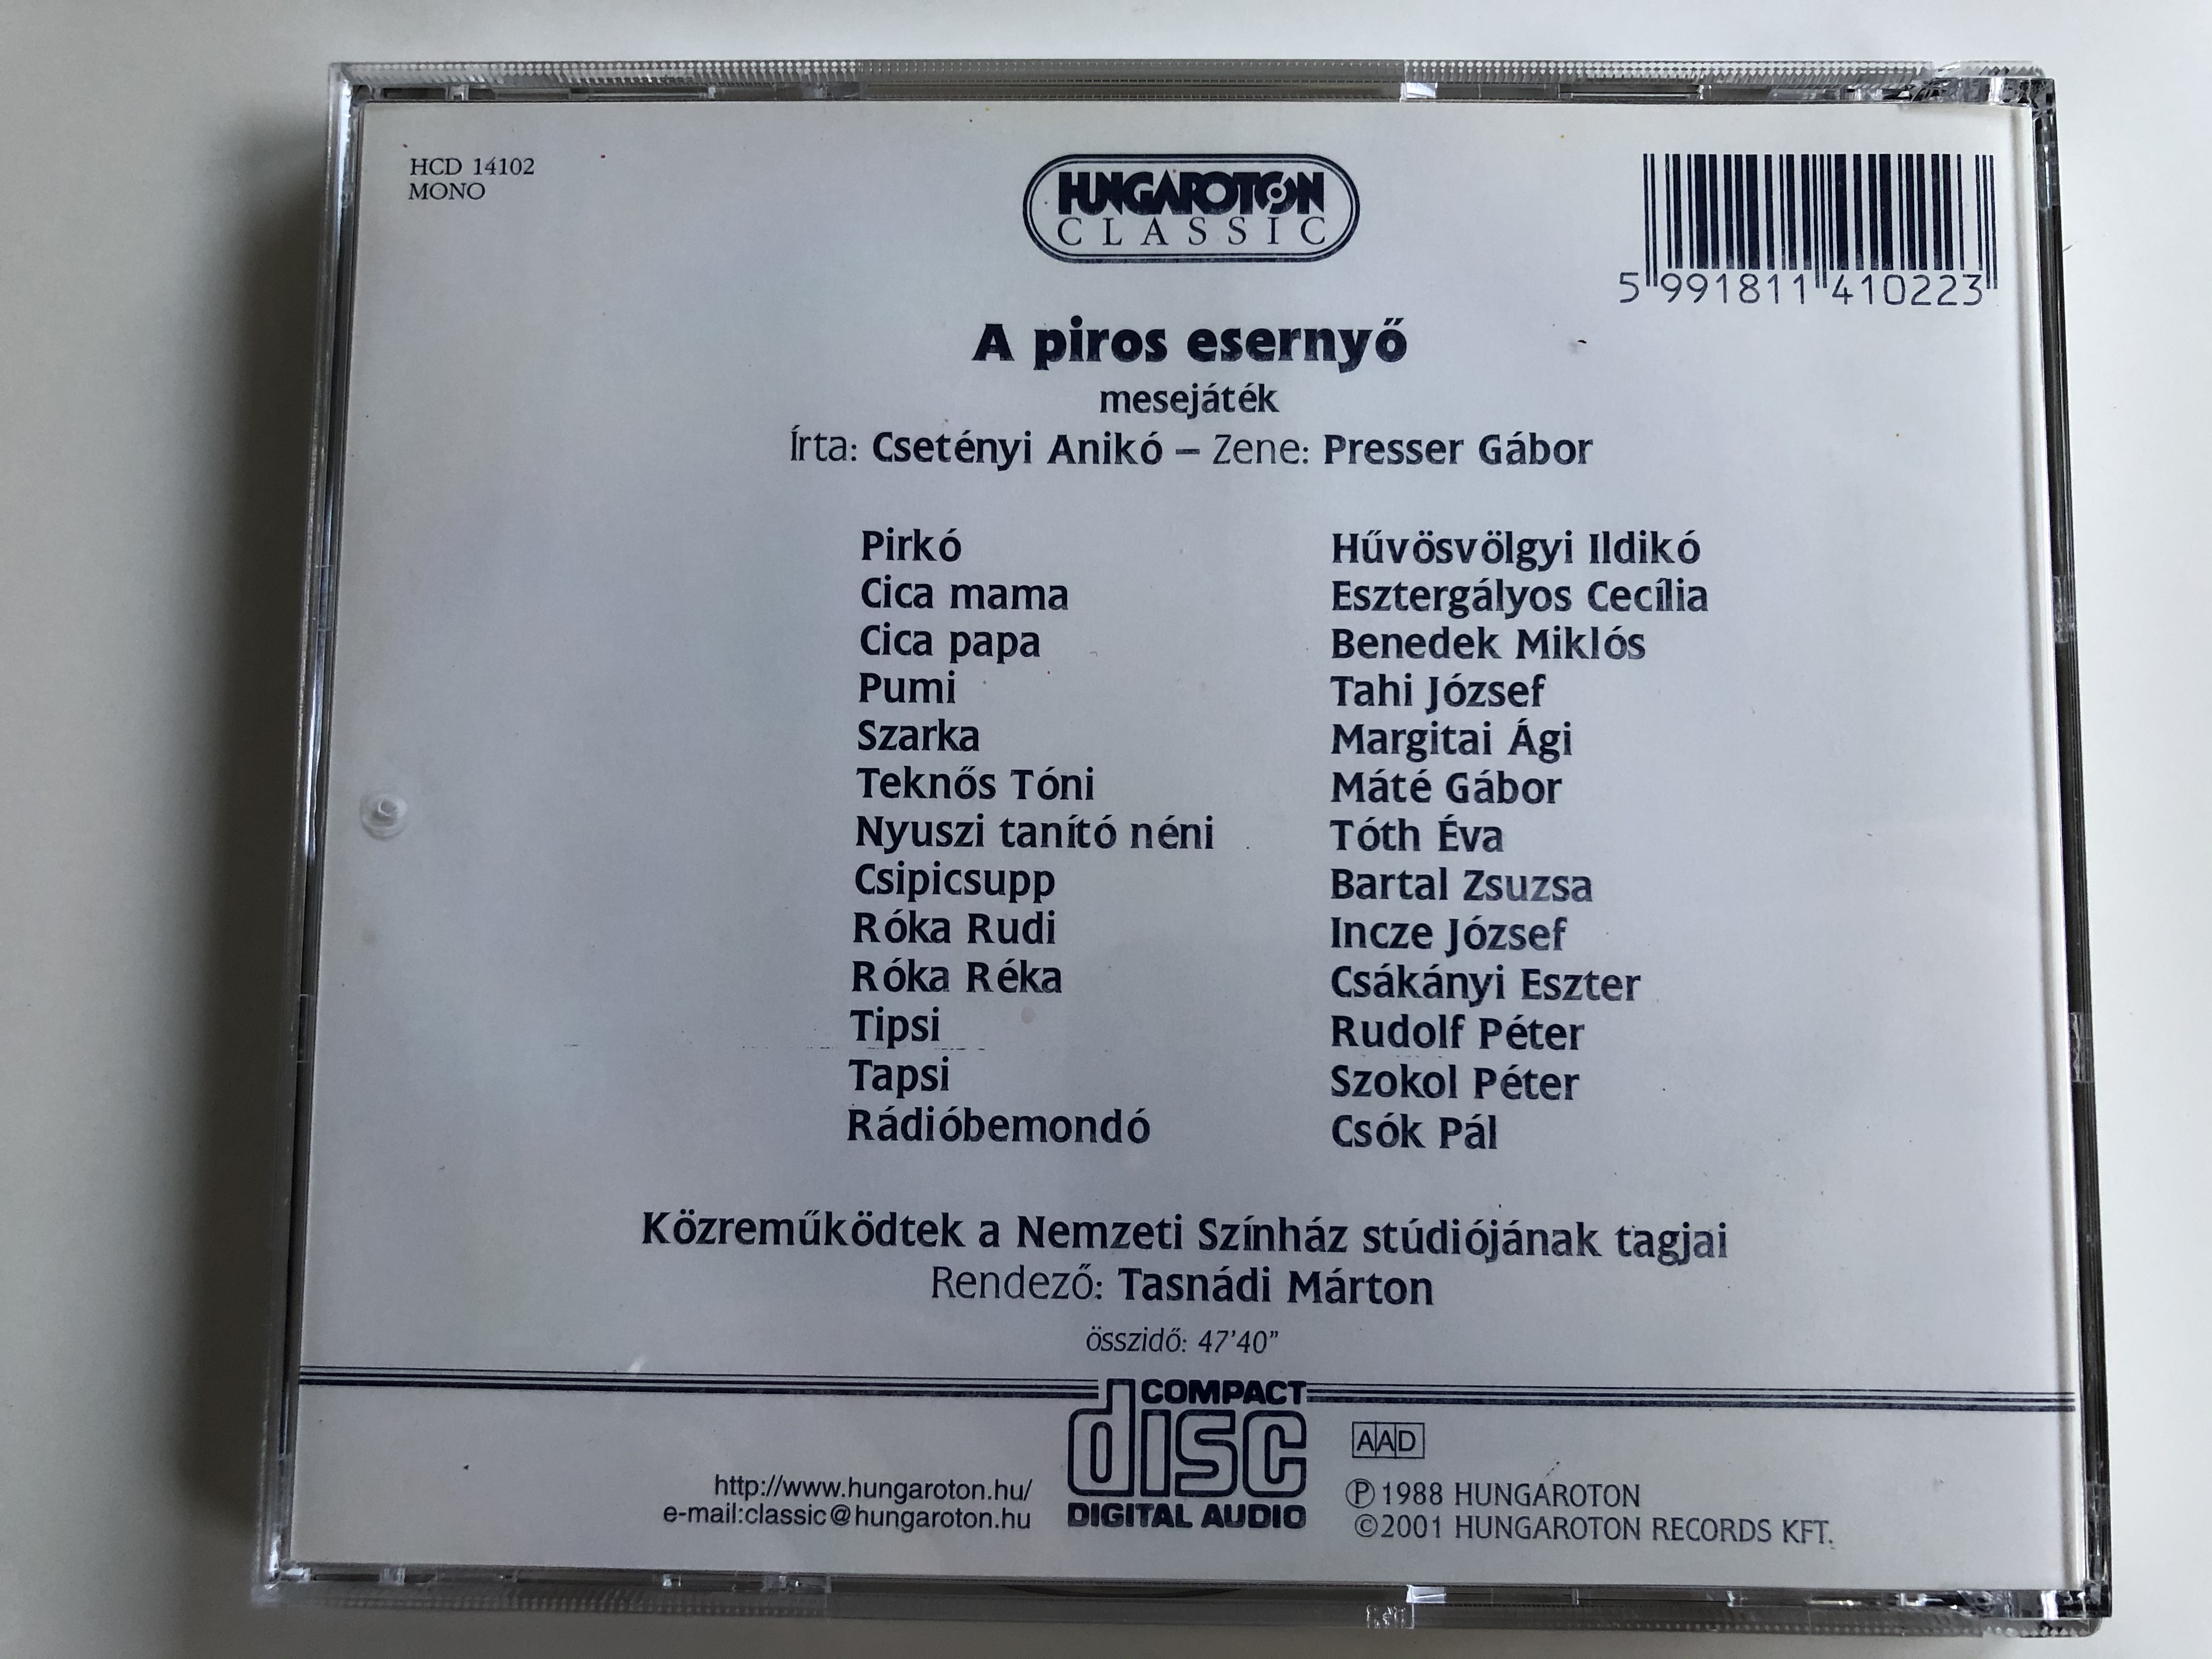 a-piros-eserny-mesejatek-irta-csetenyi-aniko-zene-presser-gabor-hungaroton-classic-audio-cd-1988-mono-hcd-14102-4-.jpg